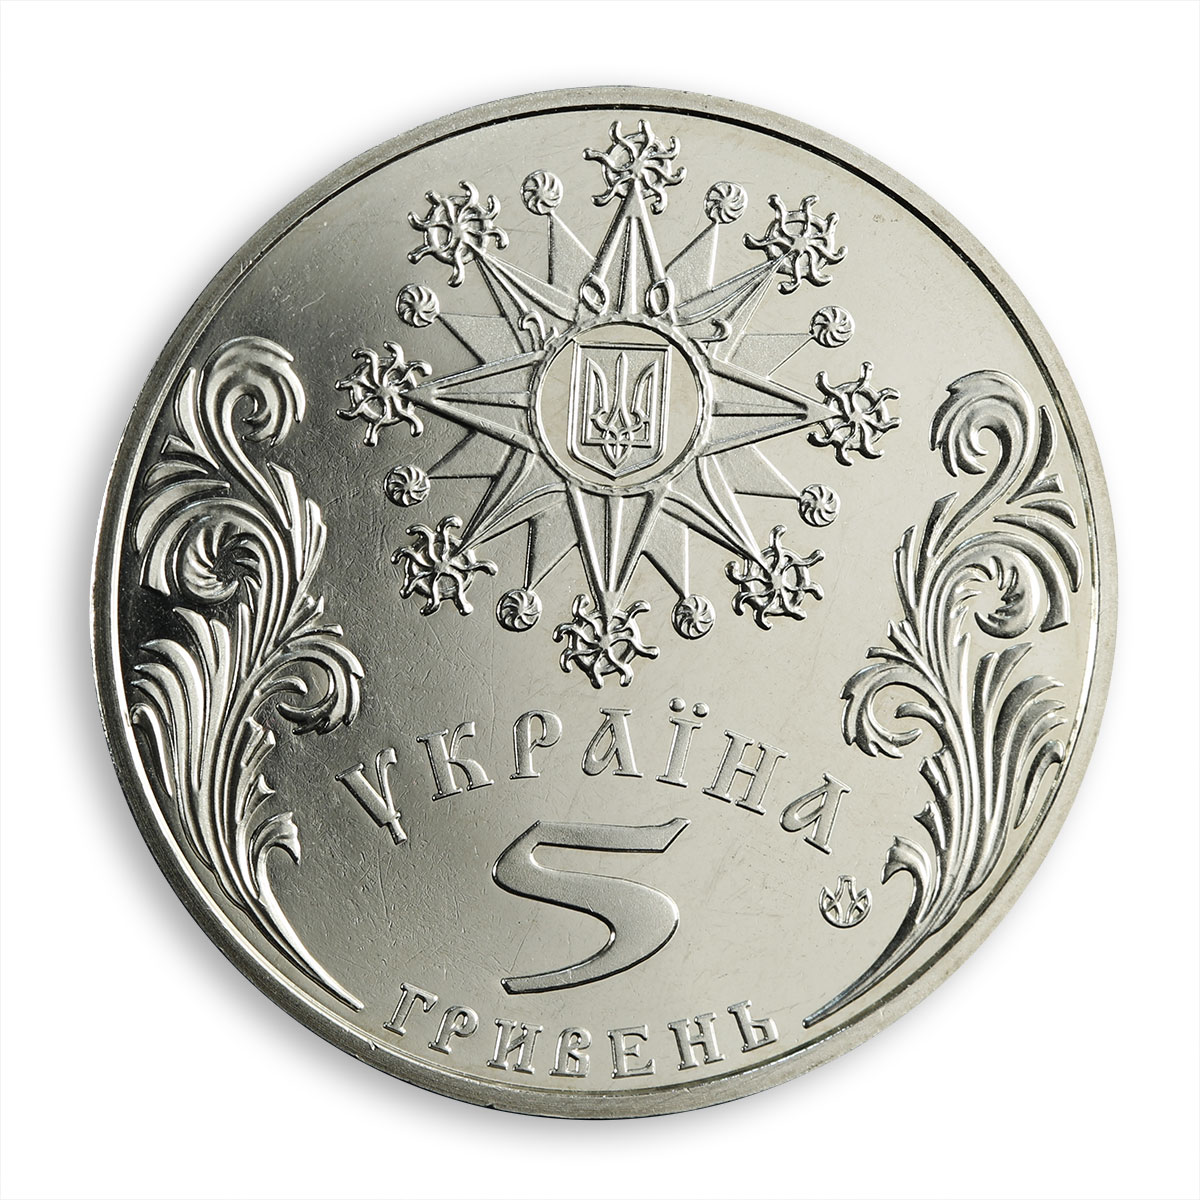 Ukraine 5 hryvnia Christmas feast orthodox holiday celebration nickel coin 2002